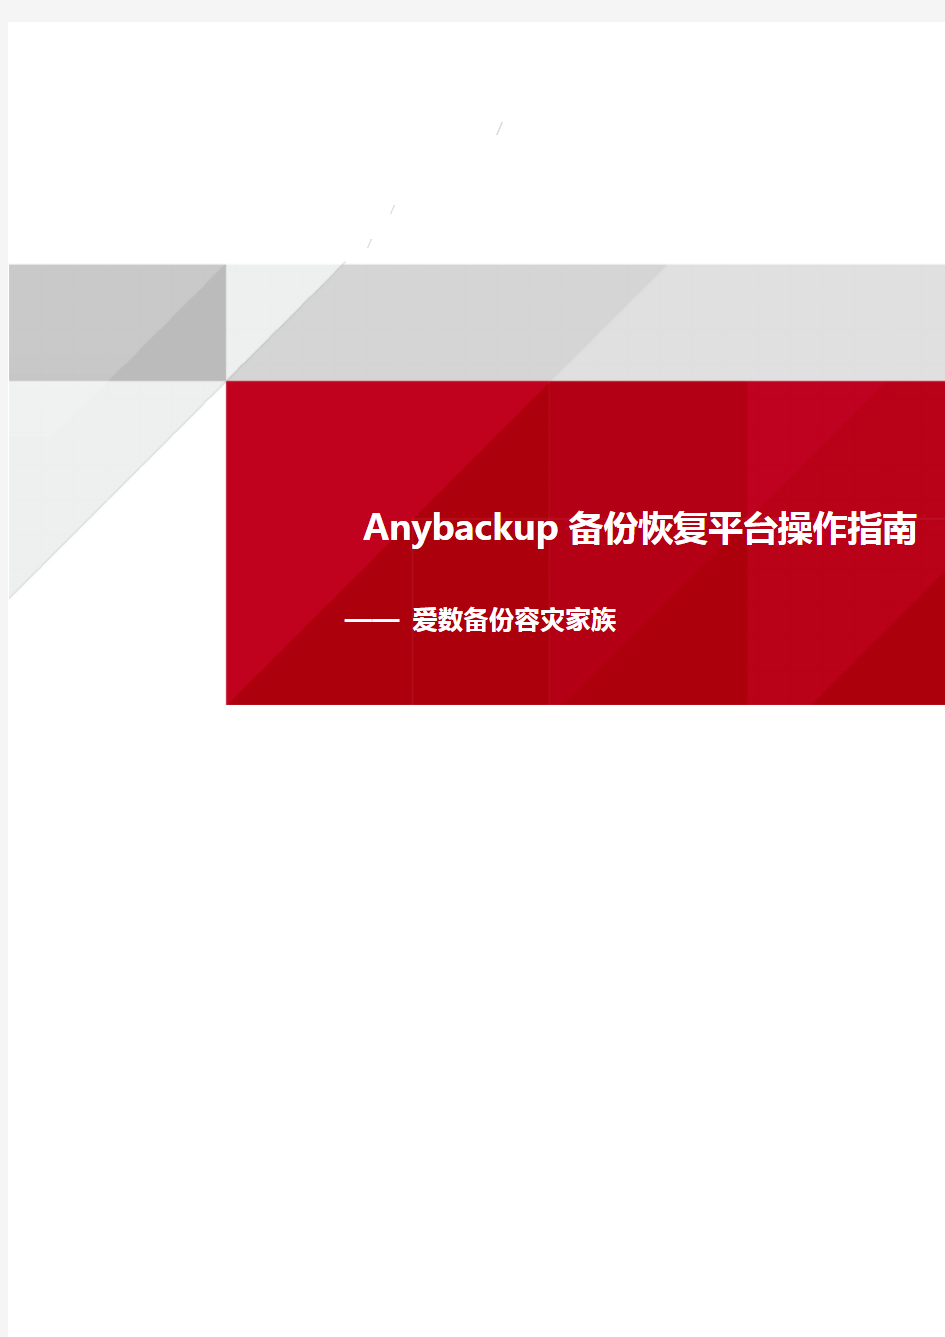 Anybackup备份恢复平台操作指南